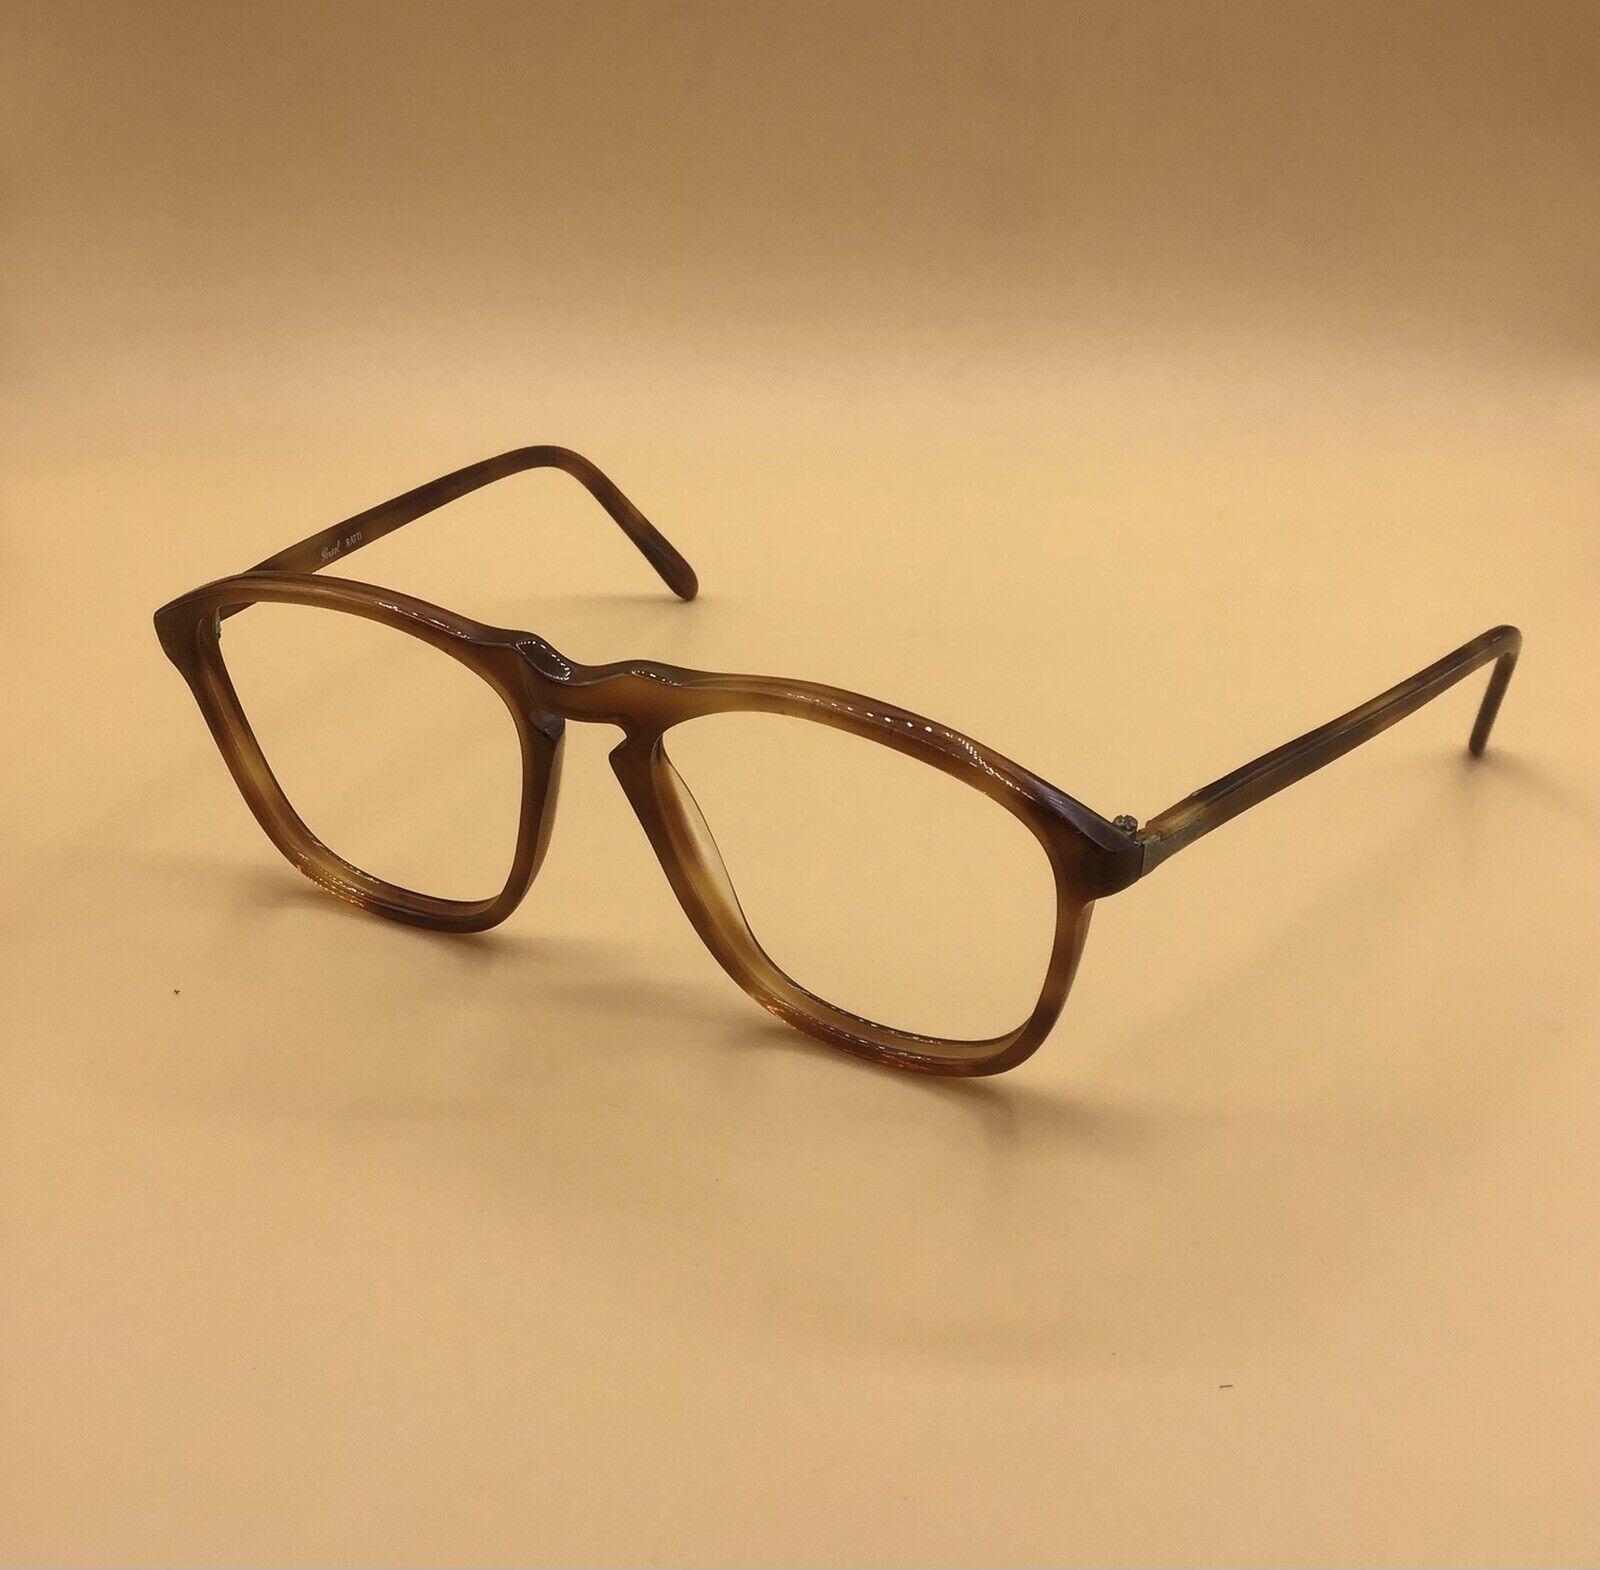 Persol Ratti occhiale vintage eyewear frame model 09127 brillen lunettes